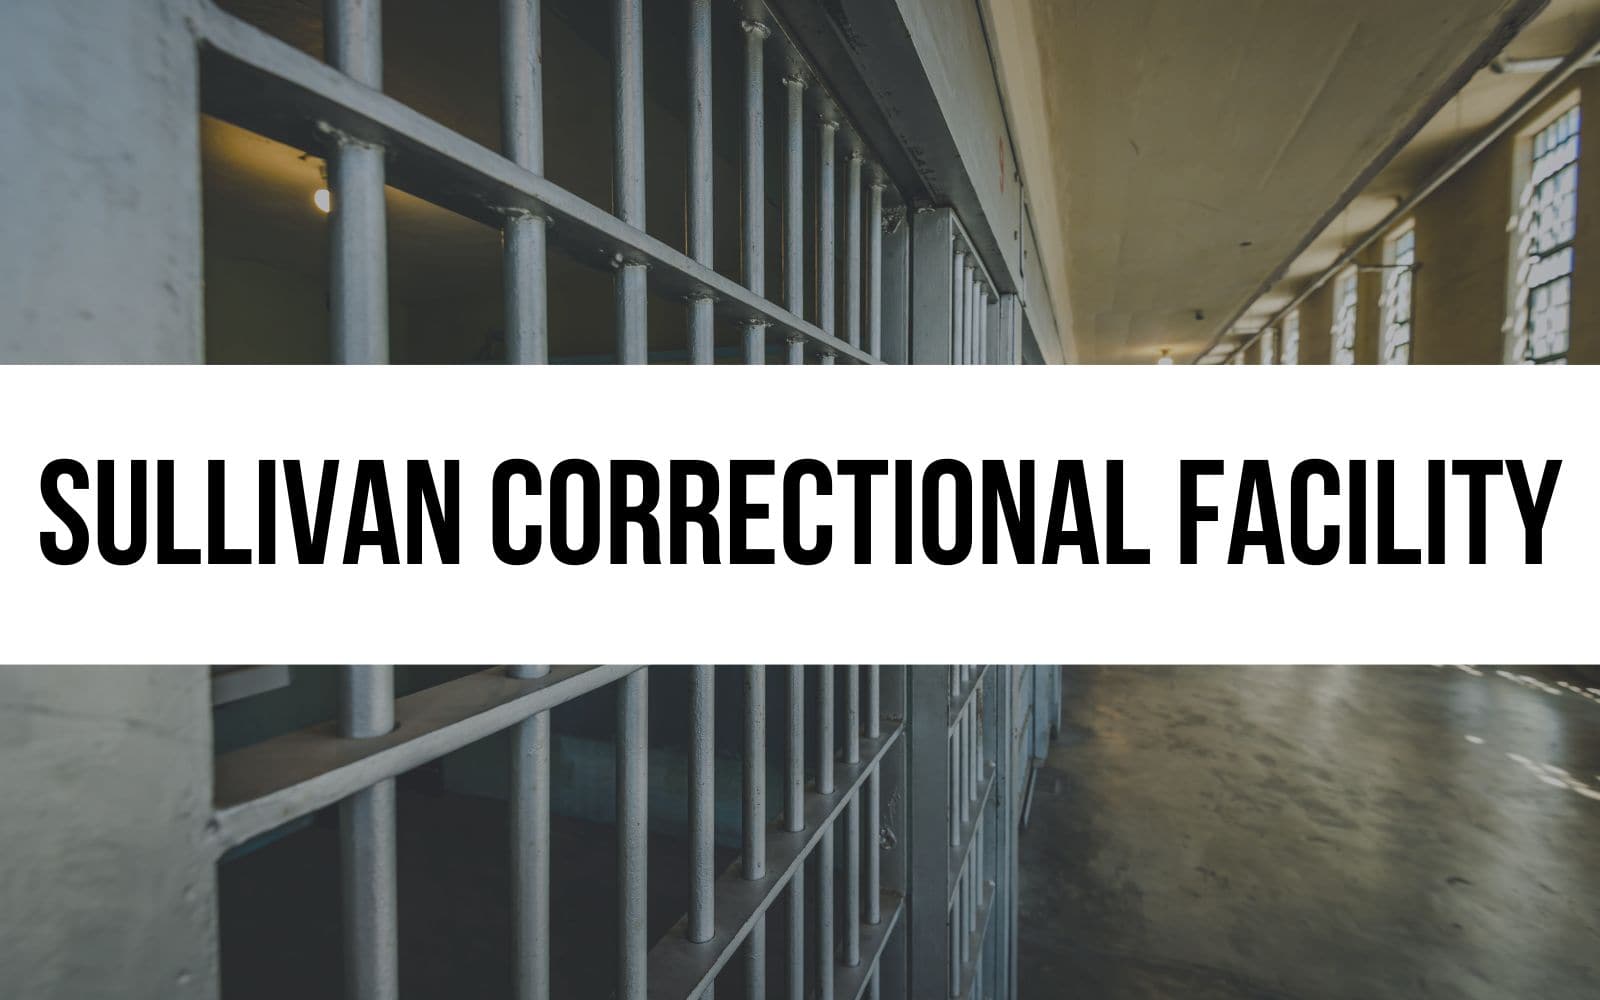 Sullivan Correctional Facility